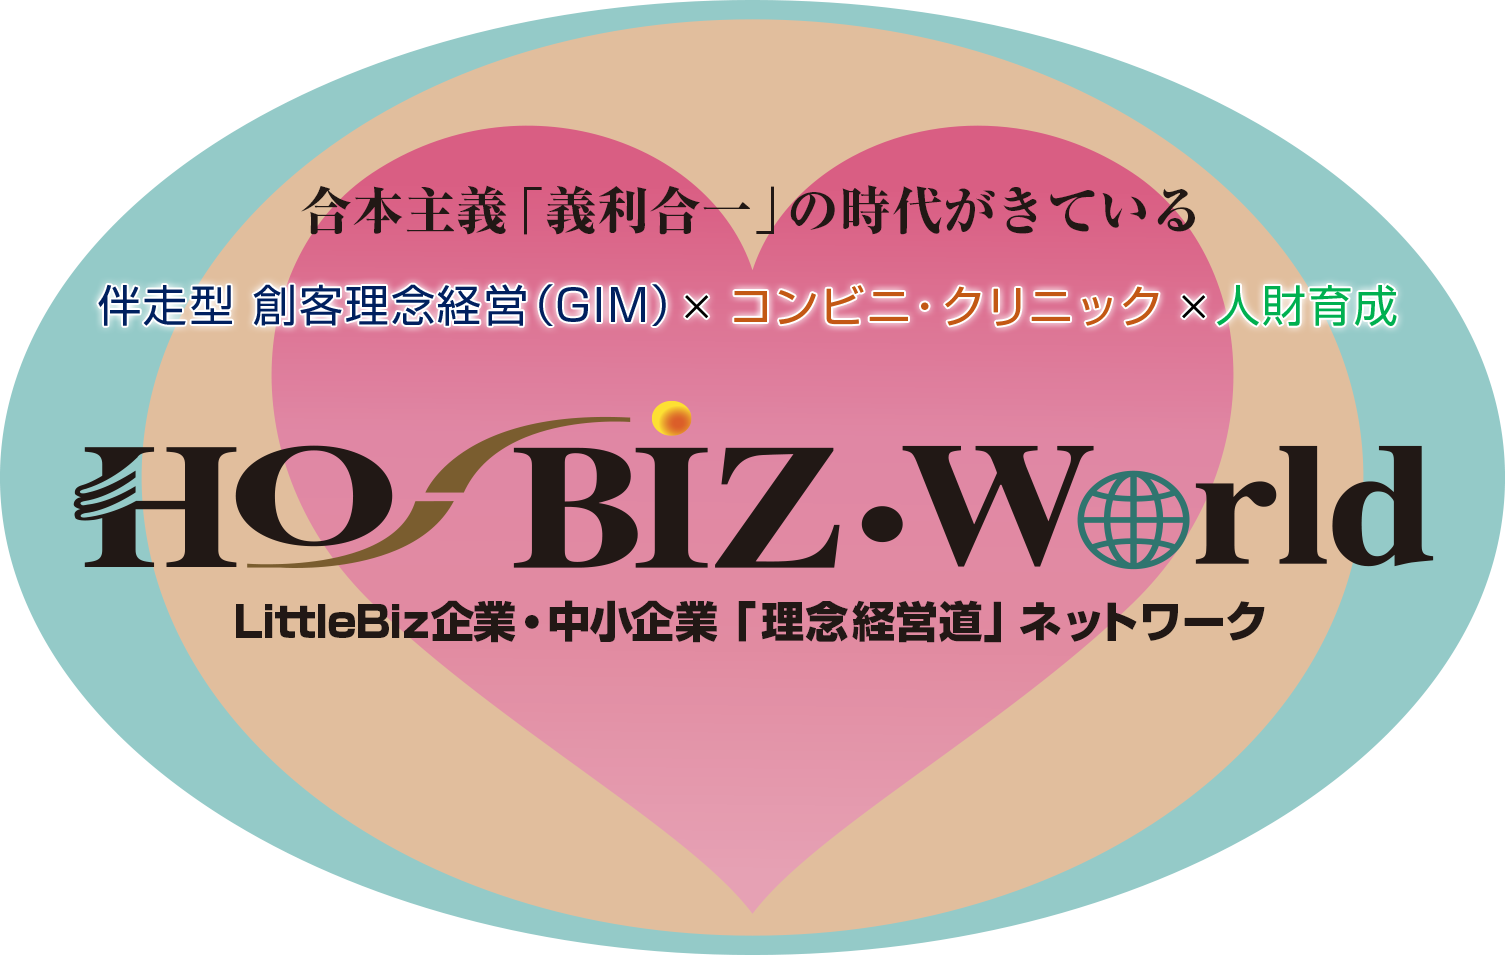 HosBiz・World - LittleBiz企業・中小企業『理念経営道」ネットワーク